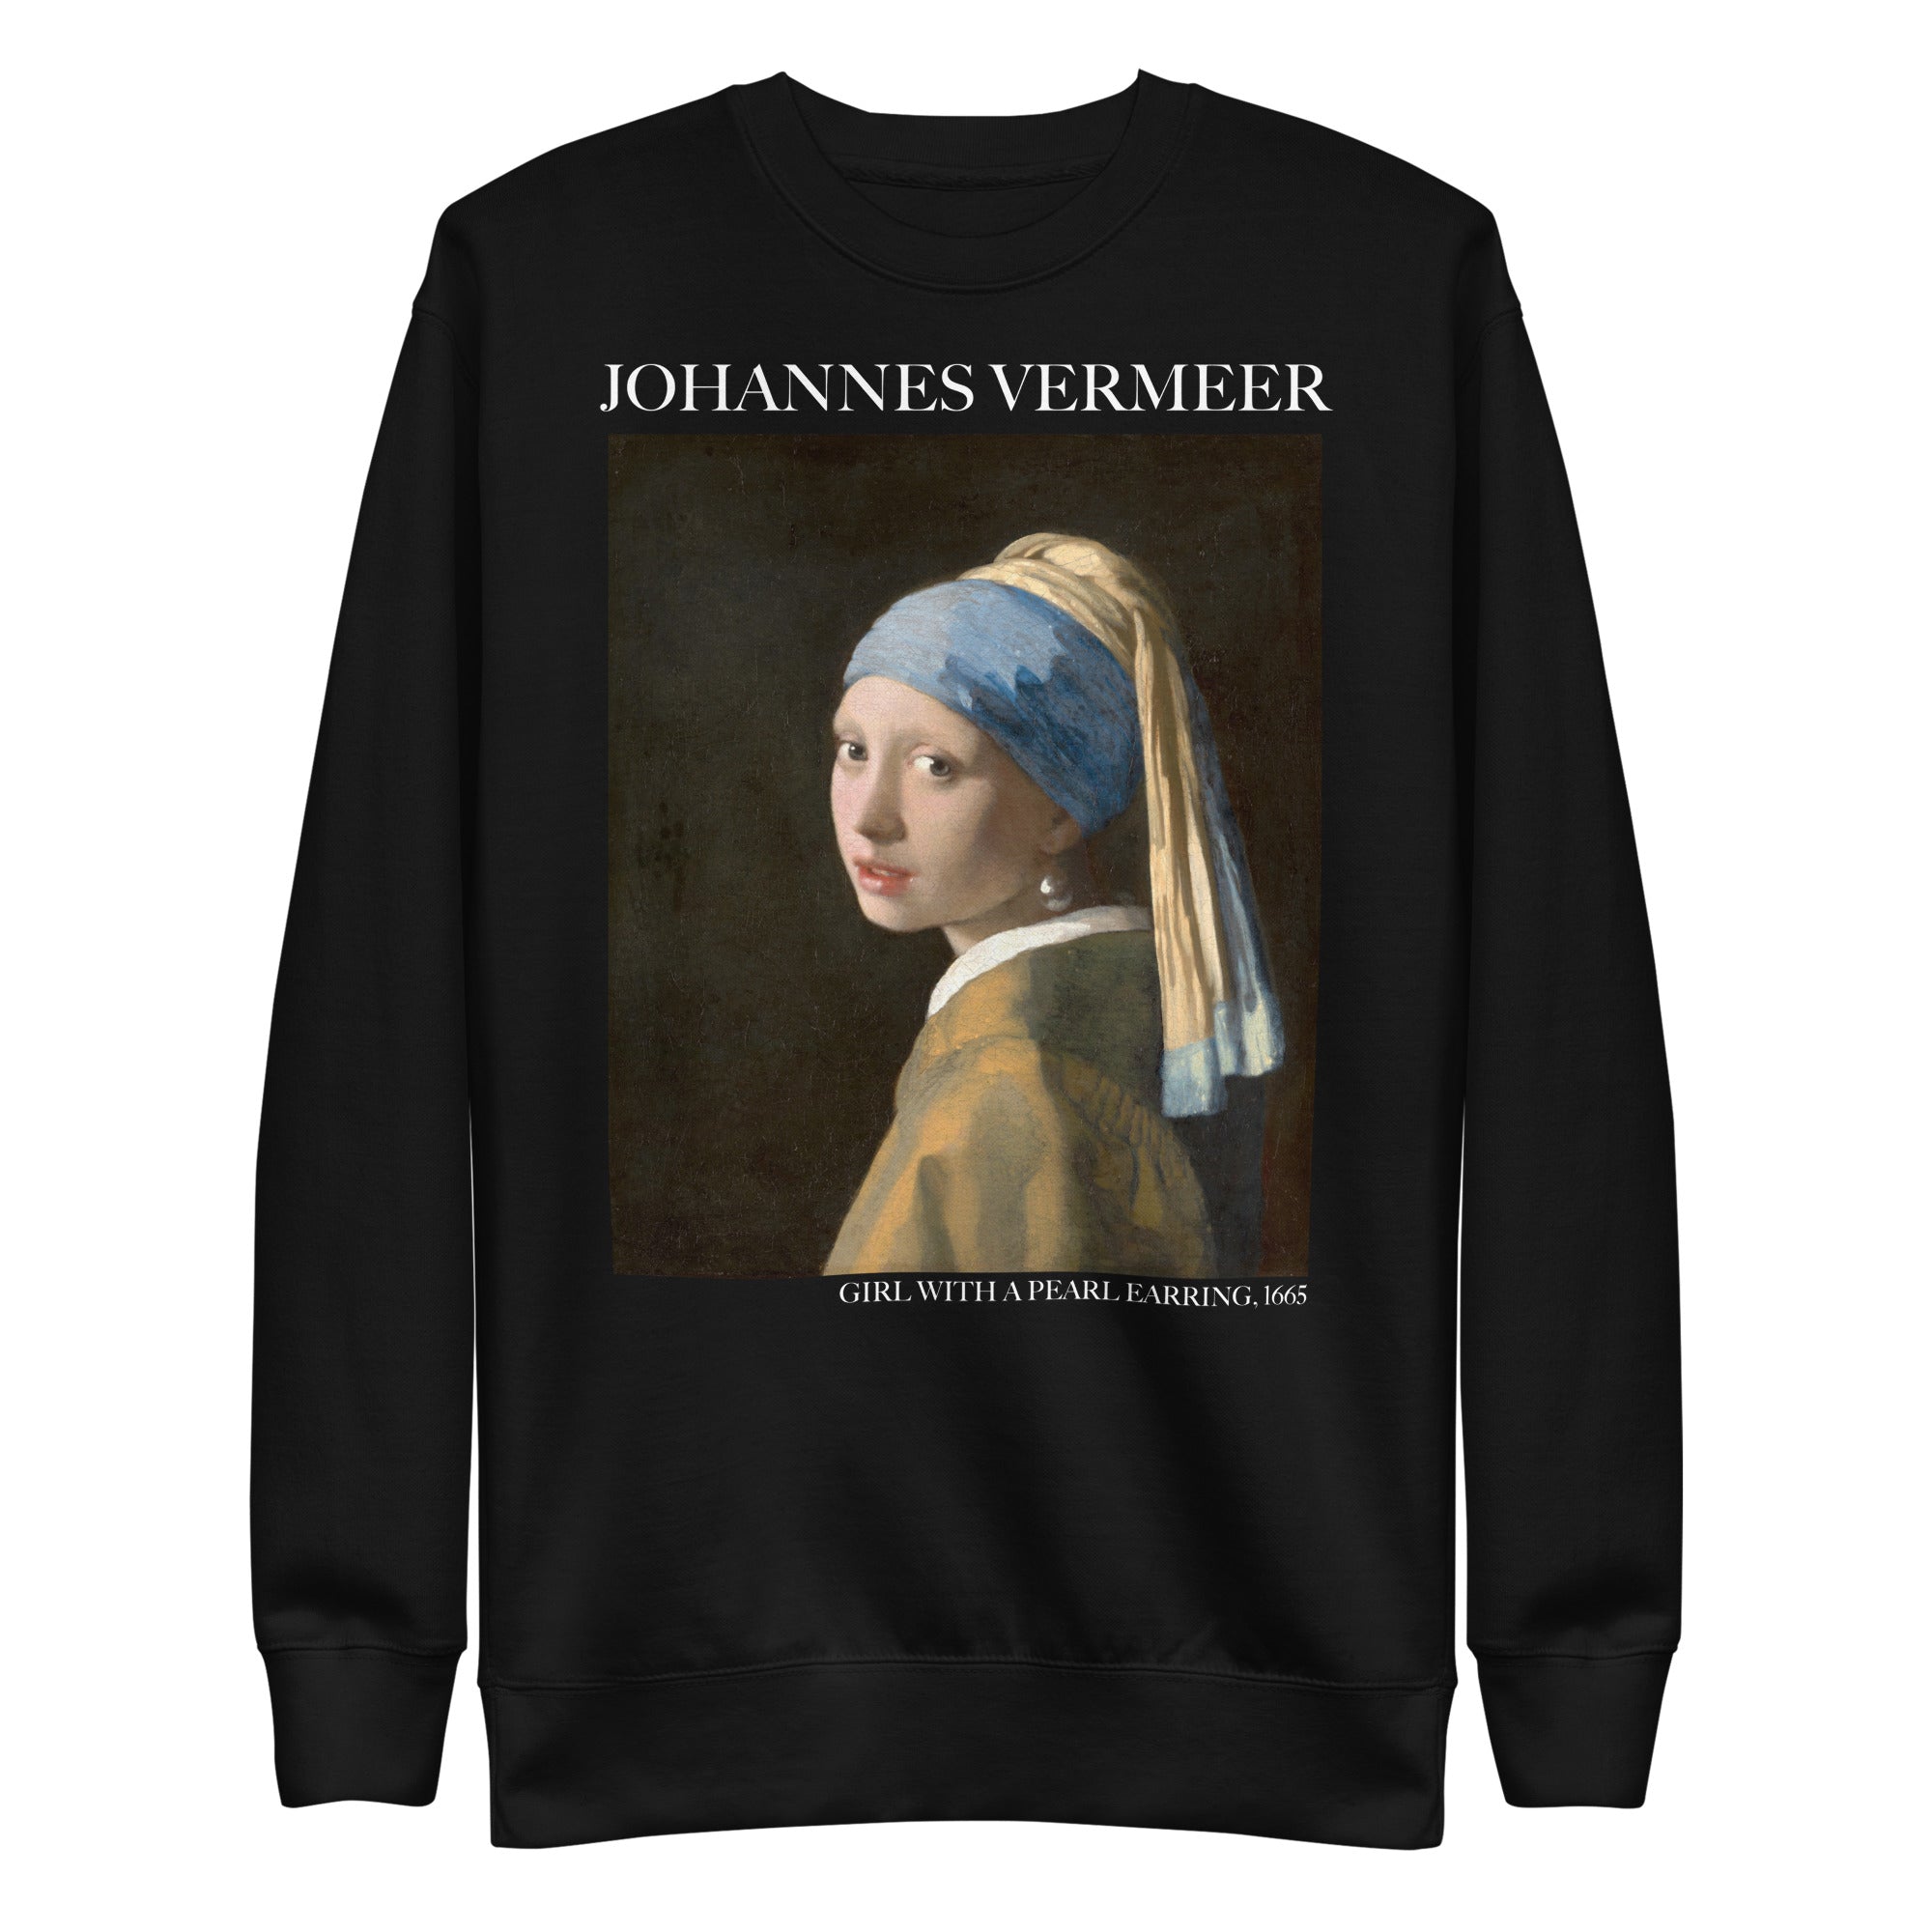 Johannes Vermeer 'Girl with a Pearl Earring' Famous Painting Sweatshirt | Unisex Premium Sweatshirt